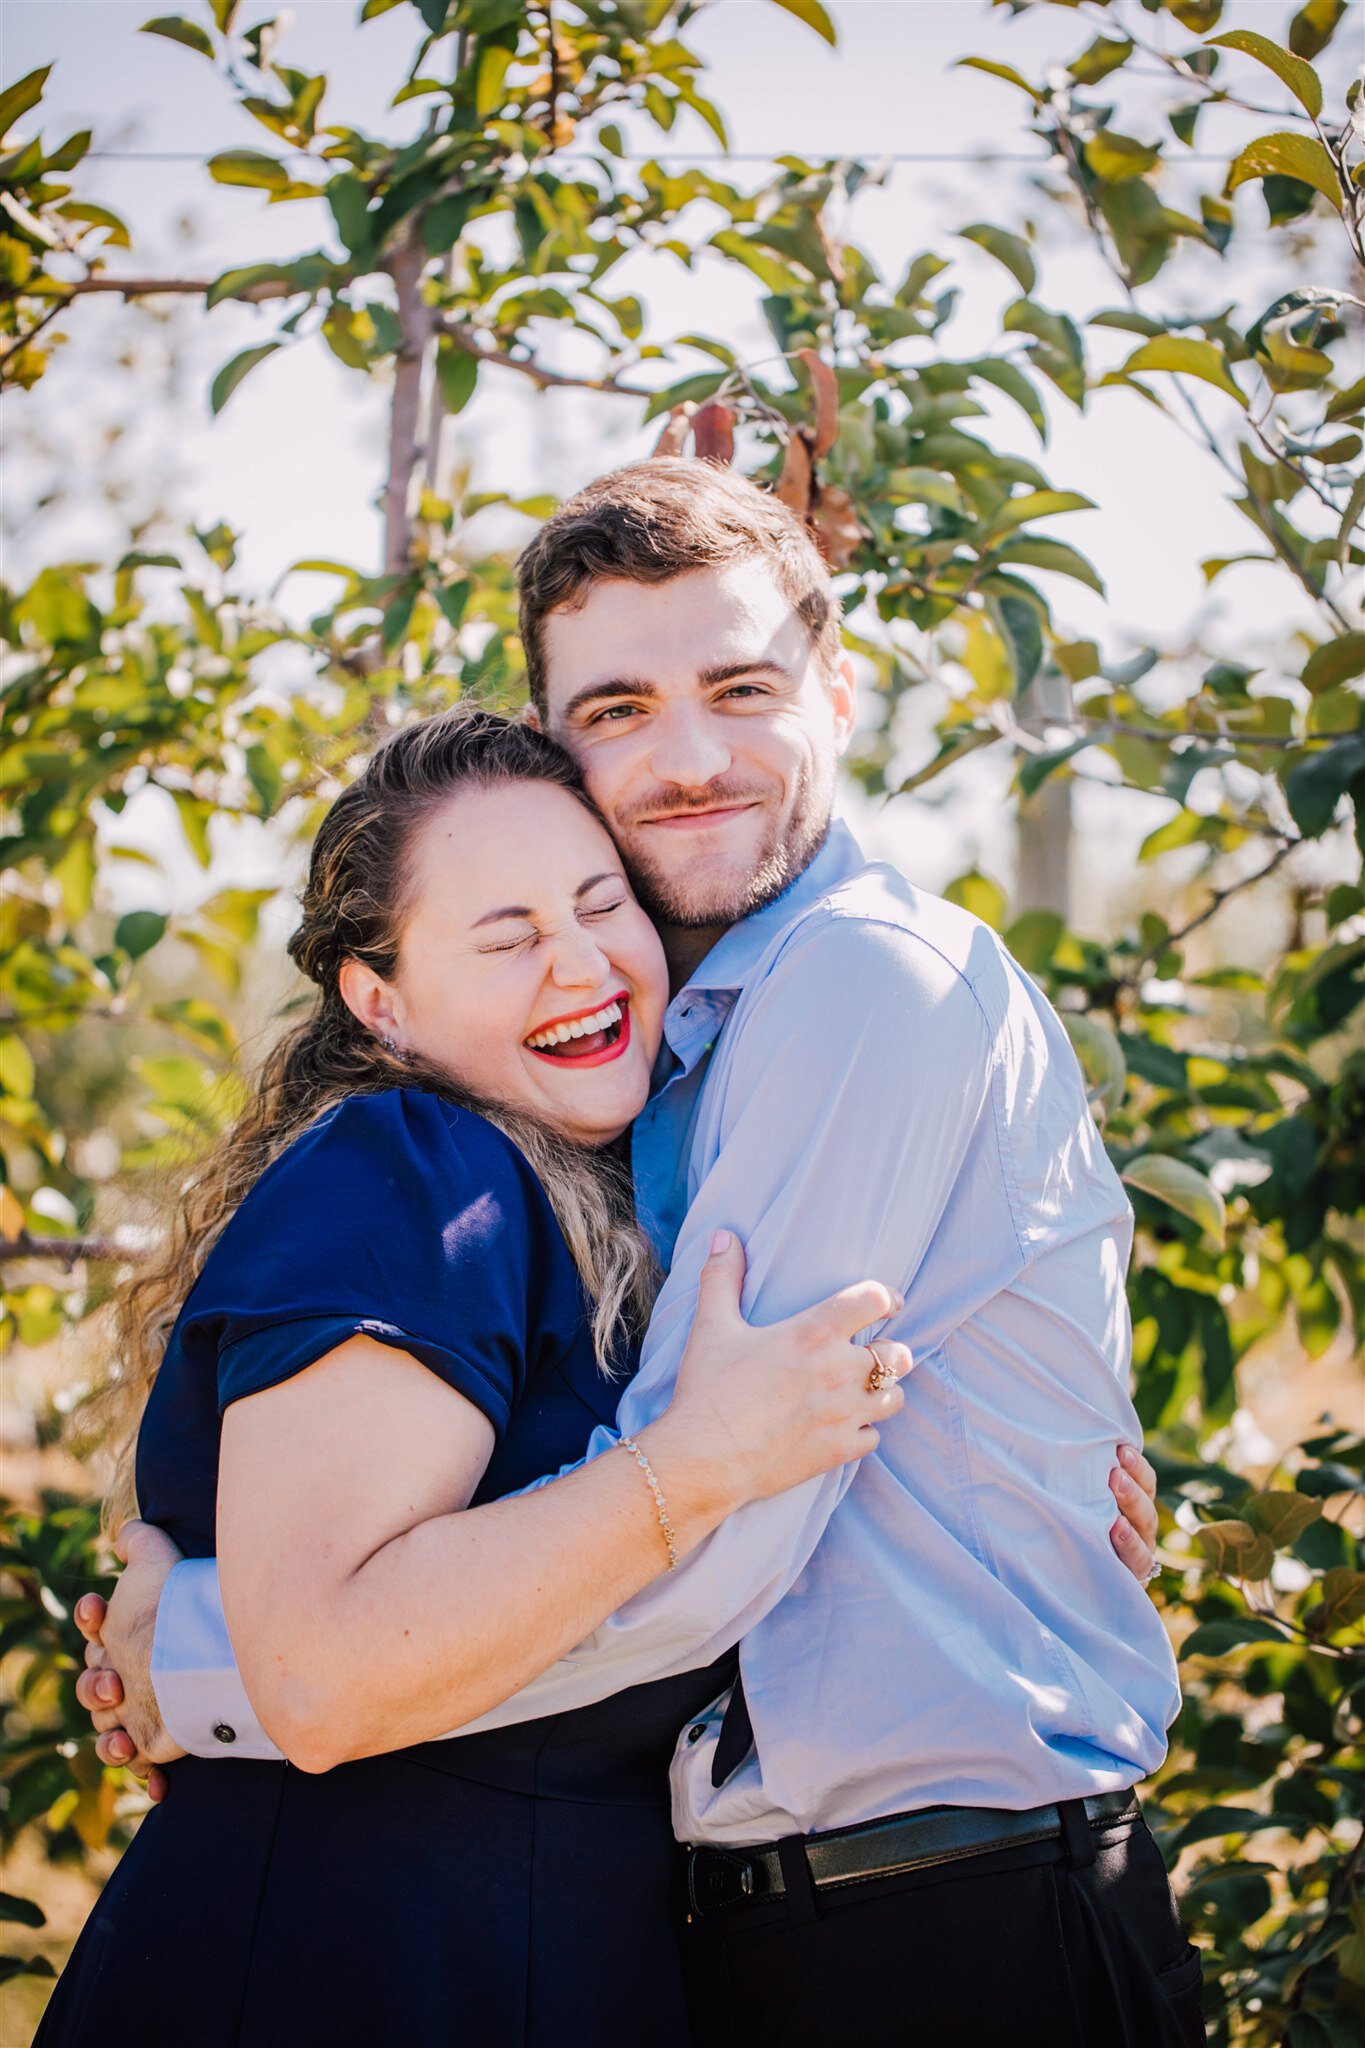 Marisa & Alex's Apple Orchard Engagement Pictures 2021